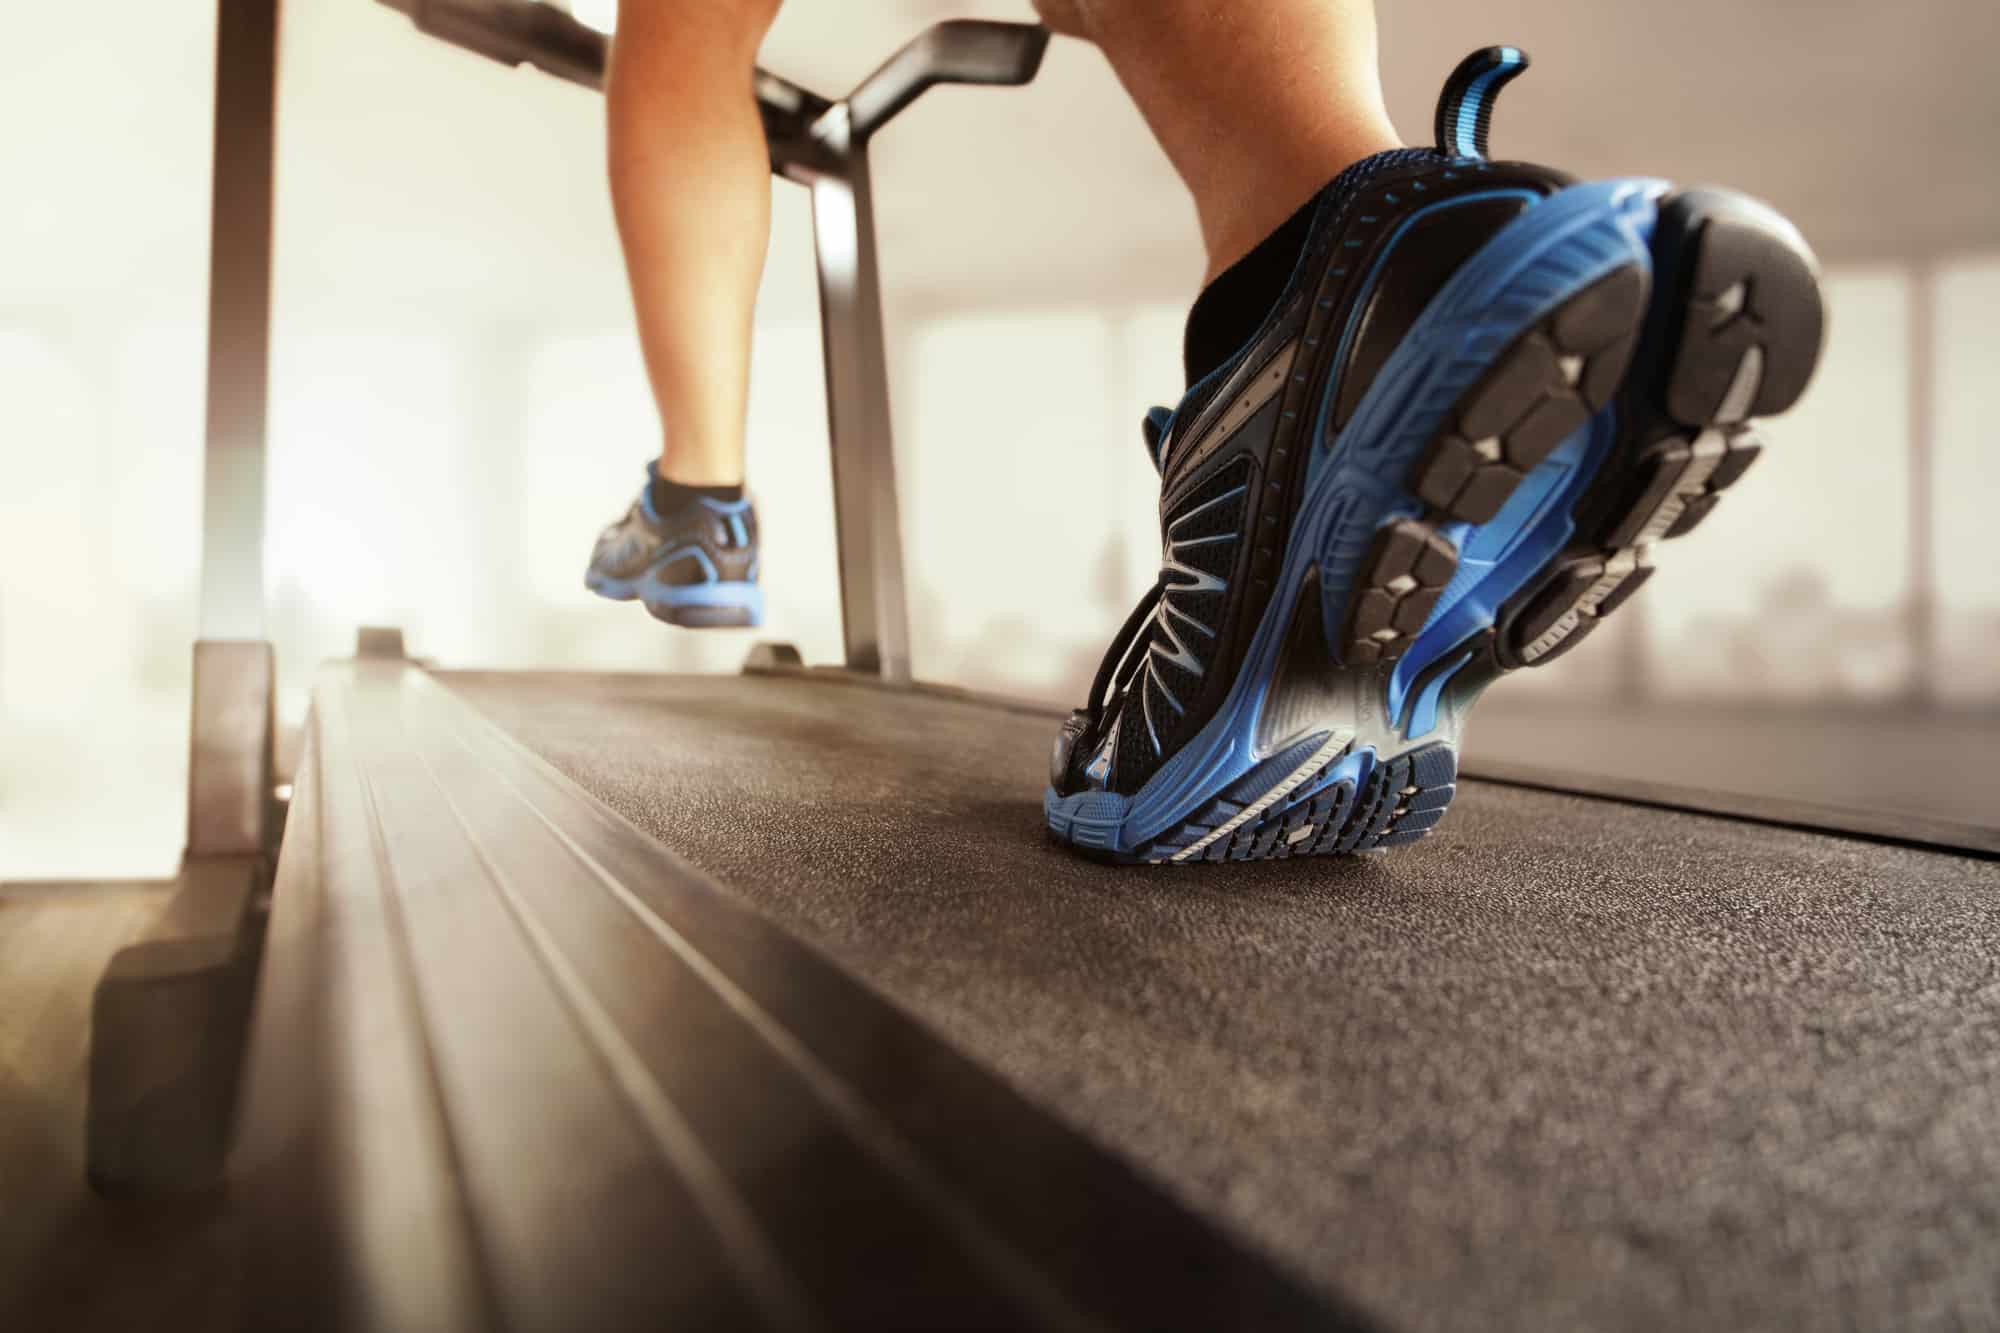 nike treadmill running shoes